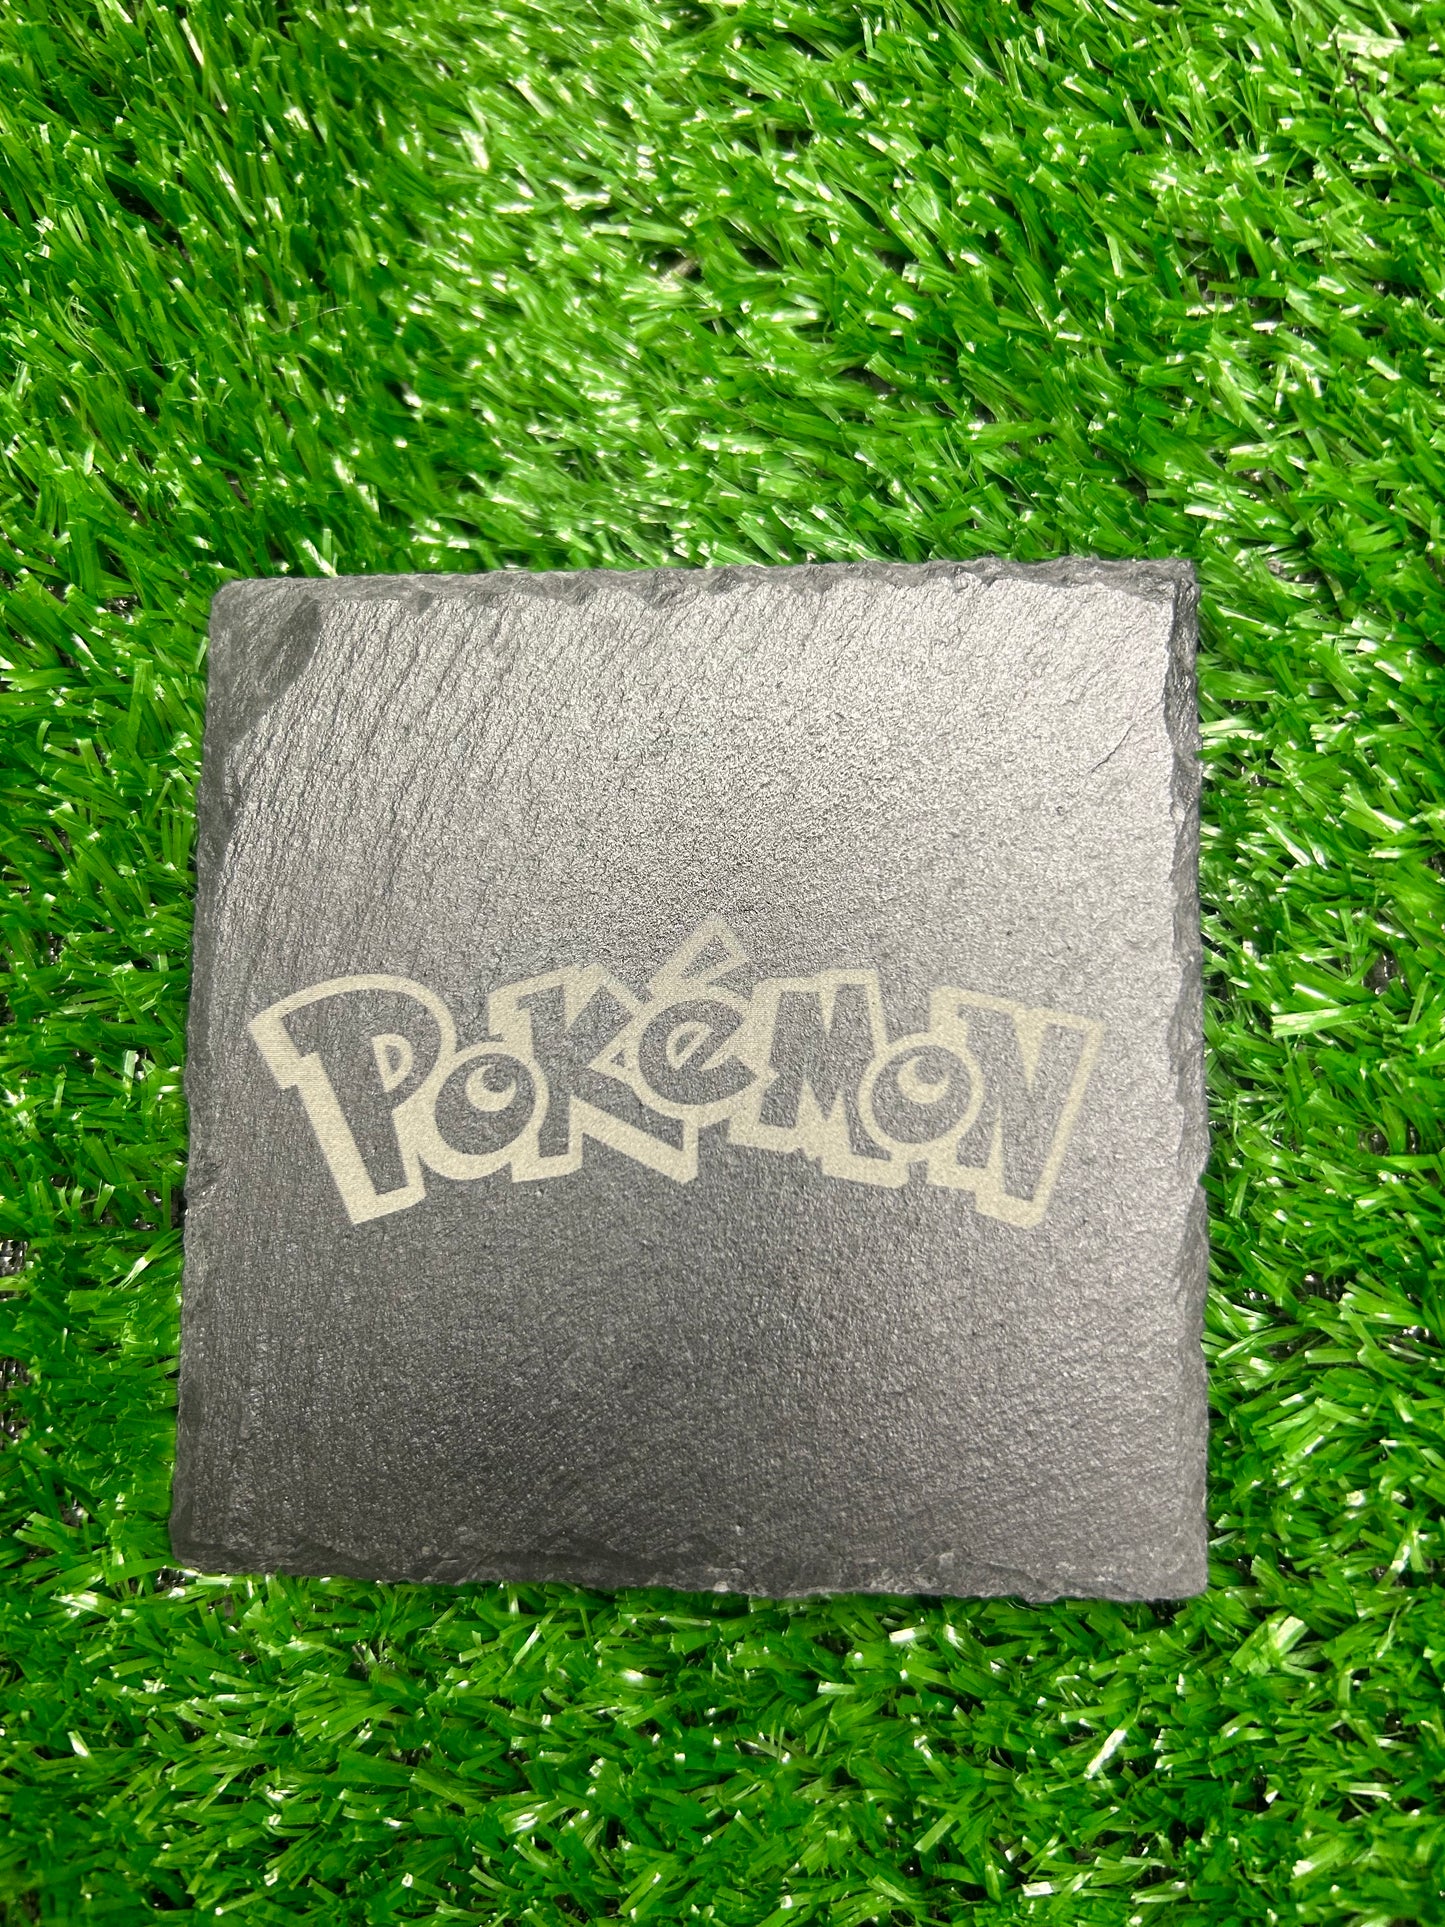 Pokémon coaster slate